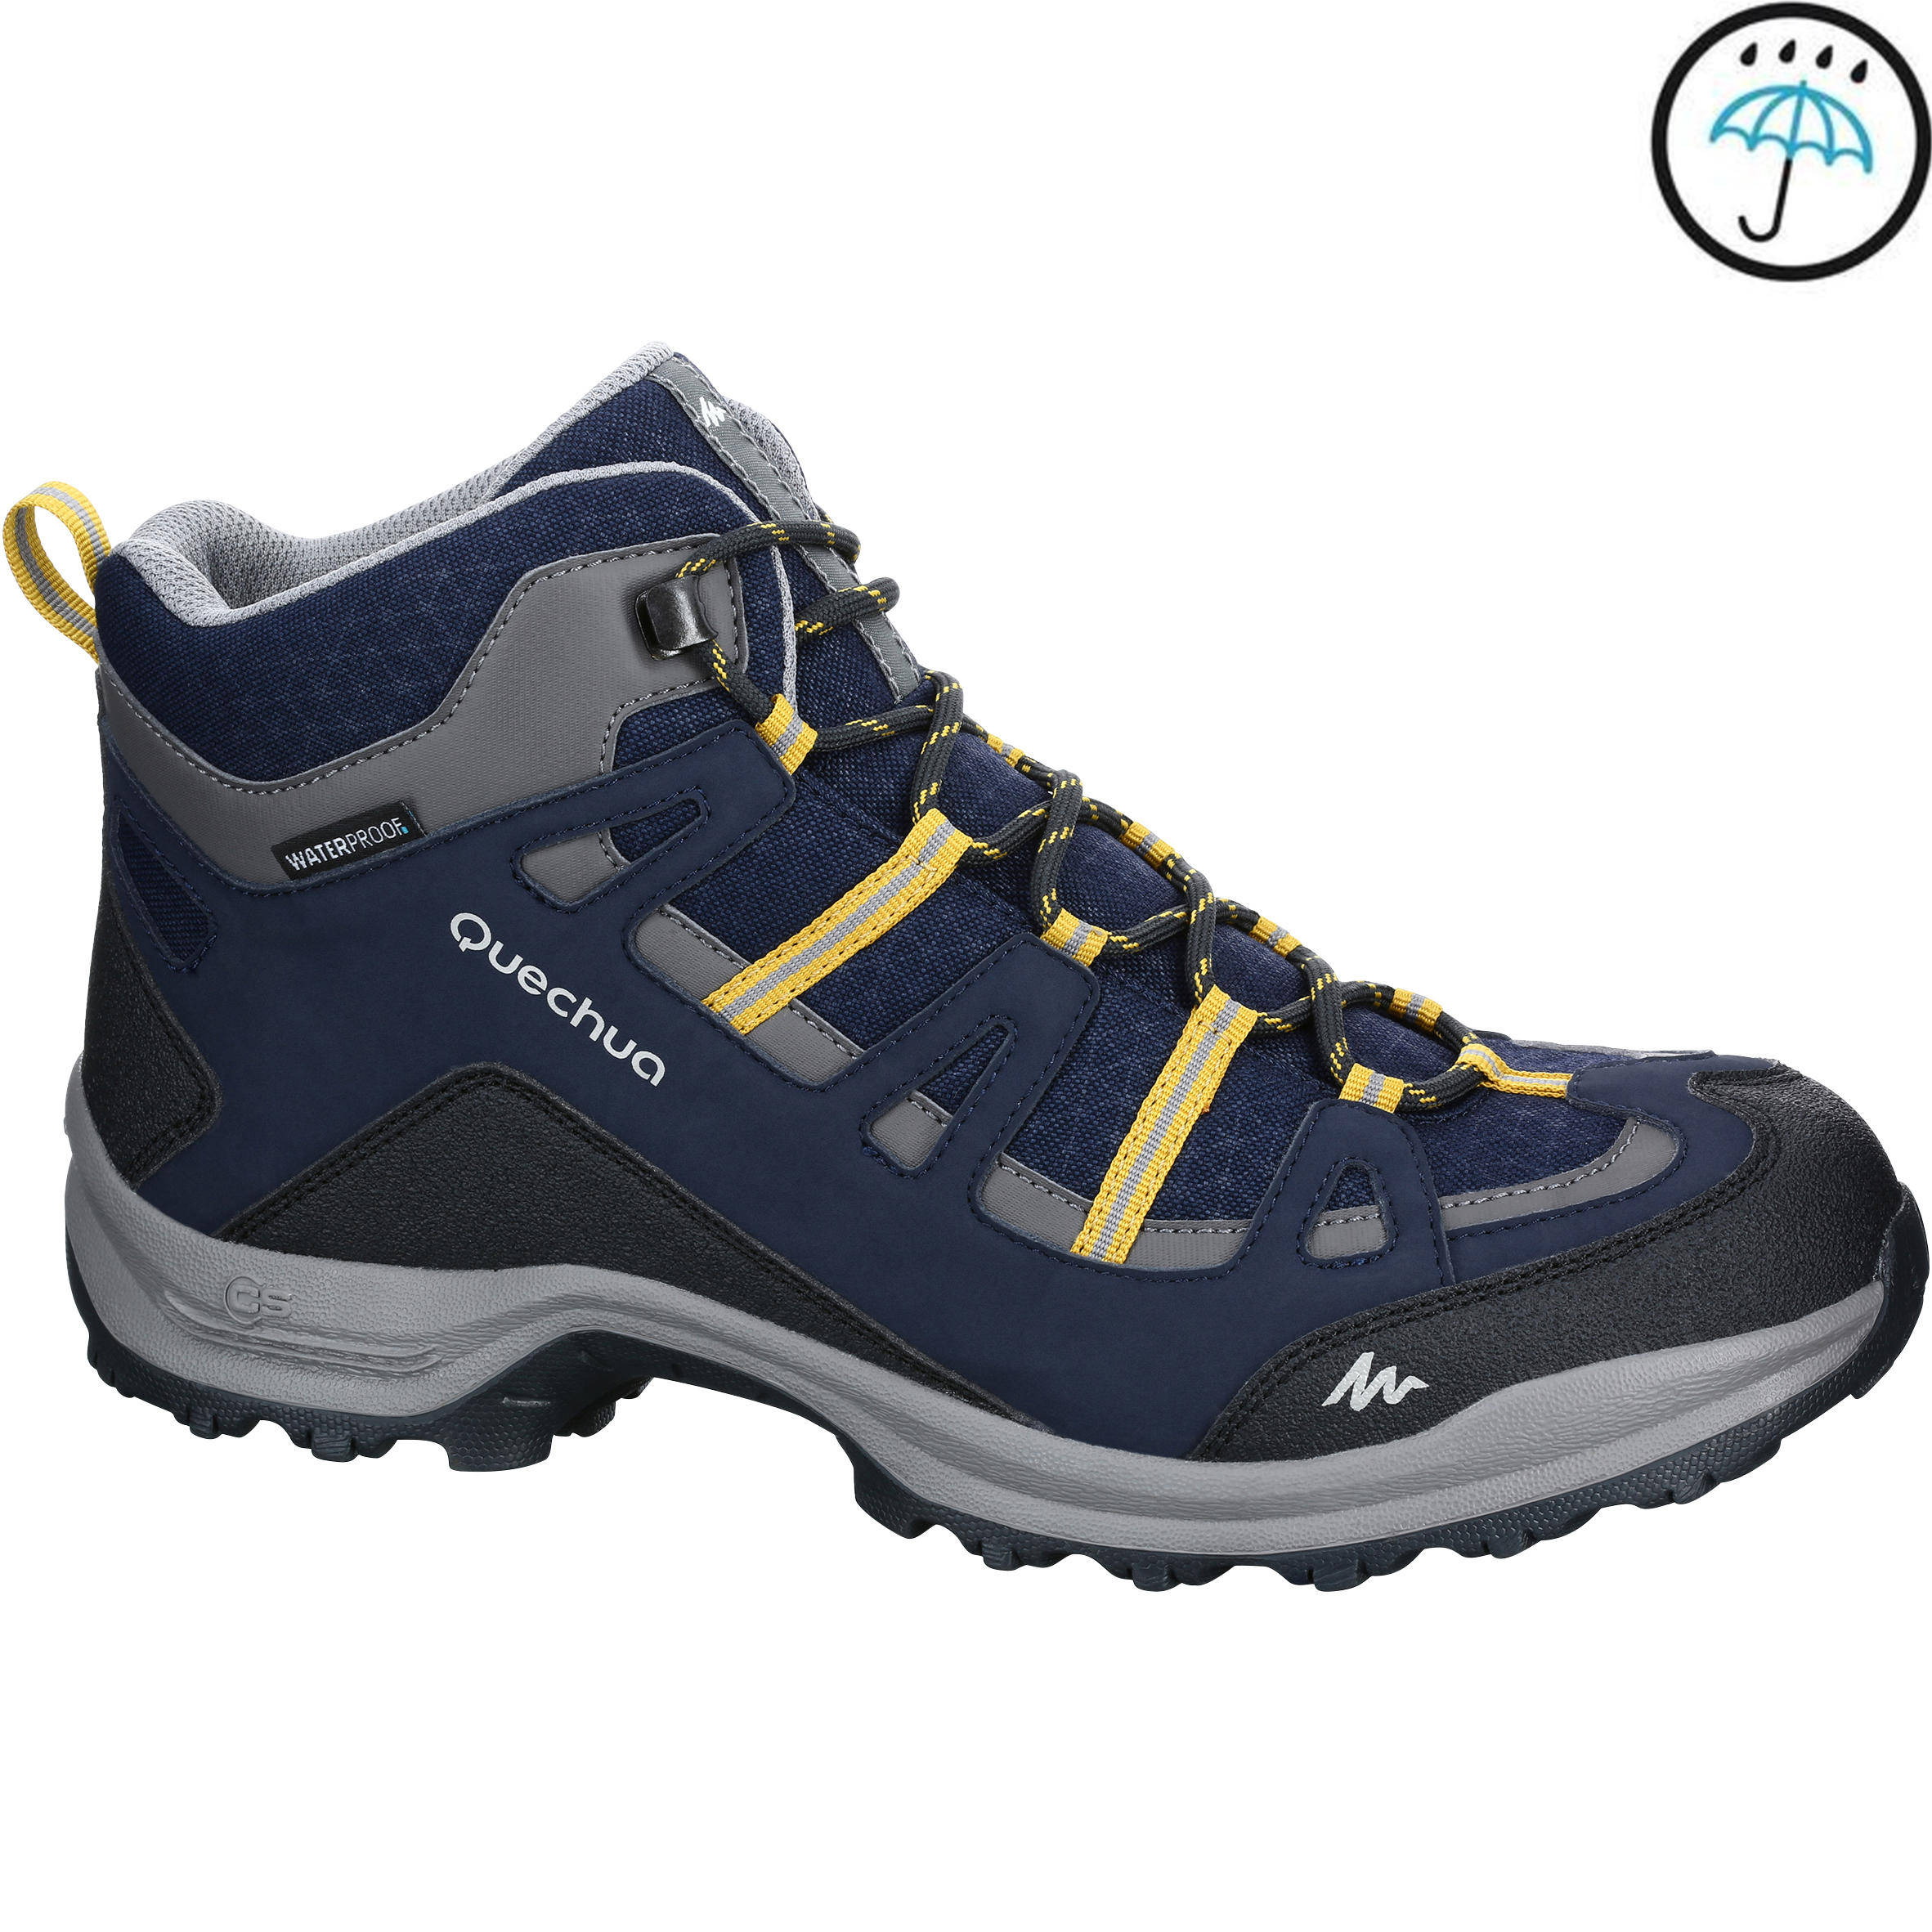 QUECHUA Arpenaz 100 Men's Mid Waterproof Hiking Boots - Navy Blue